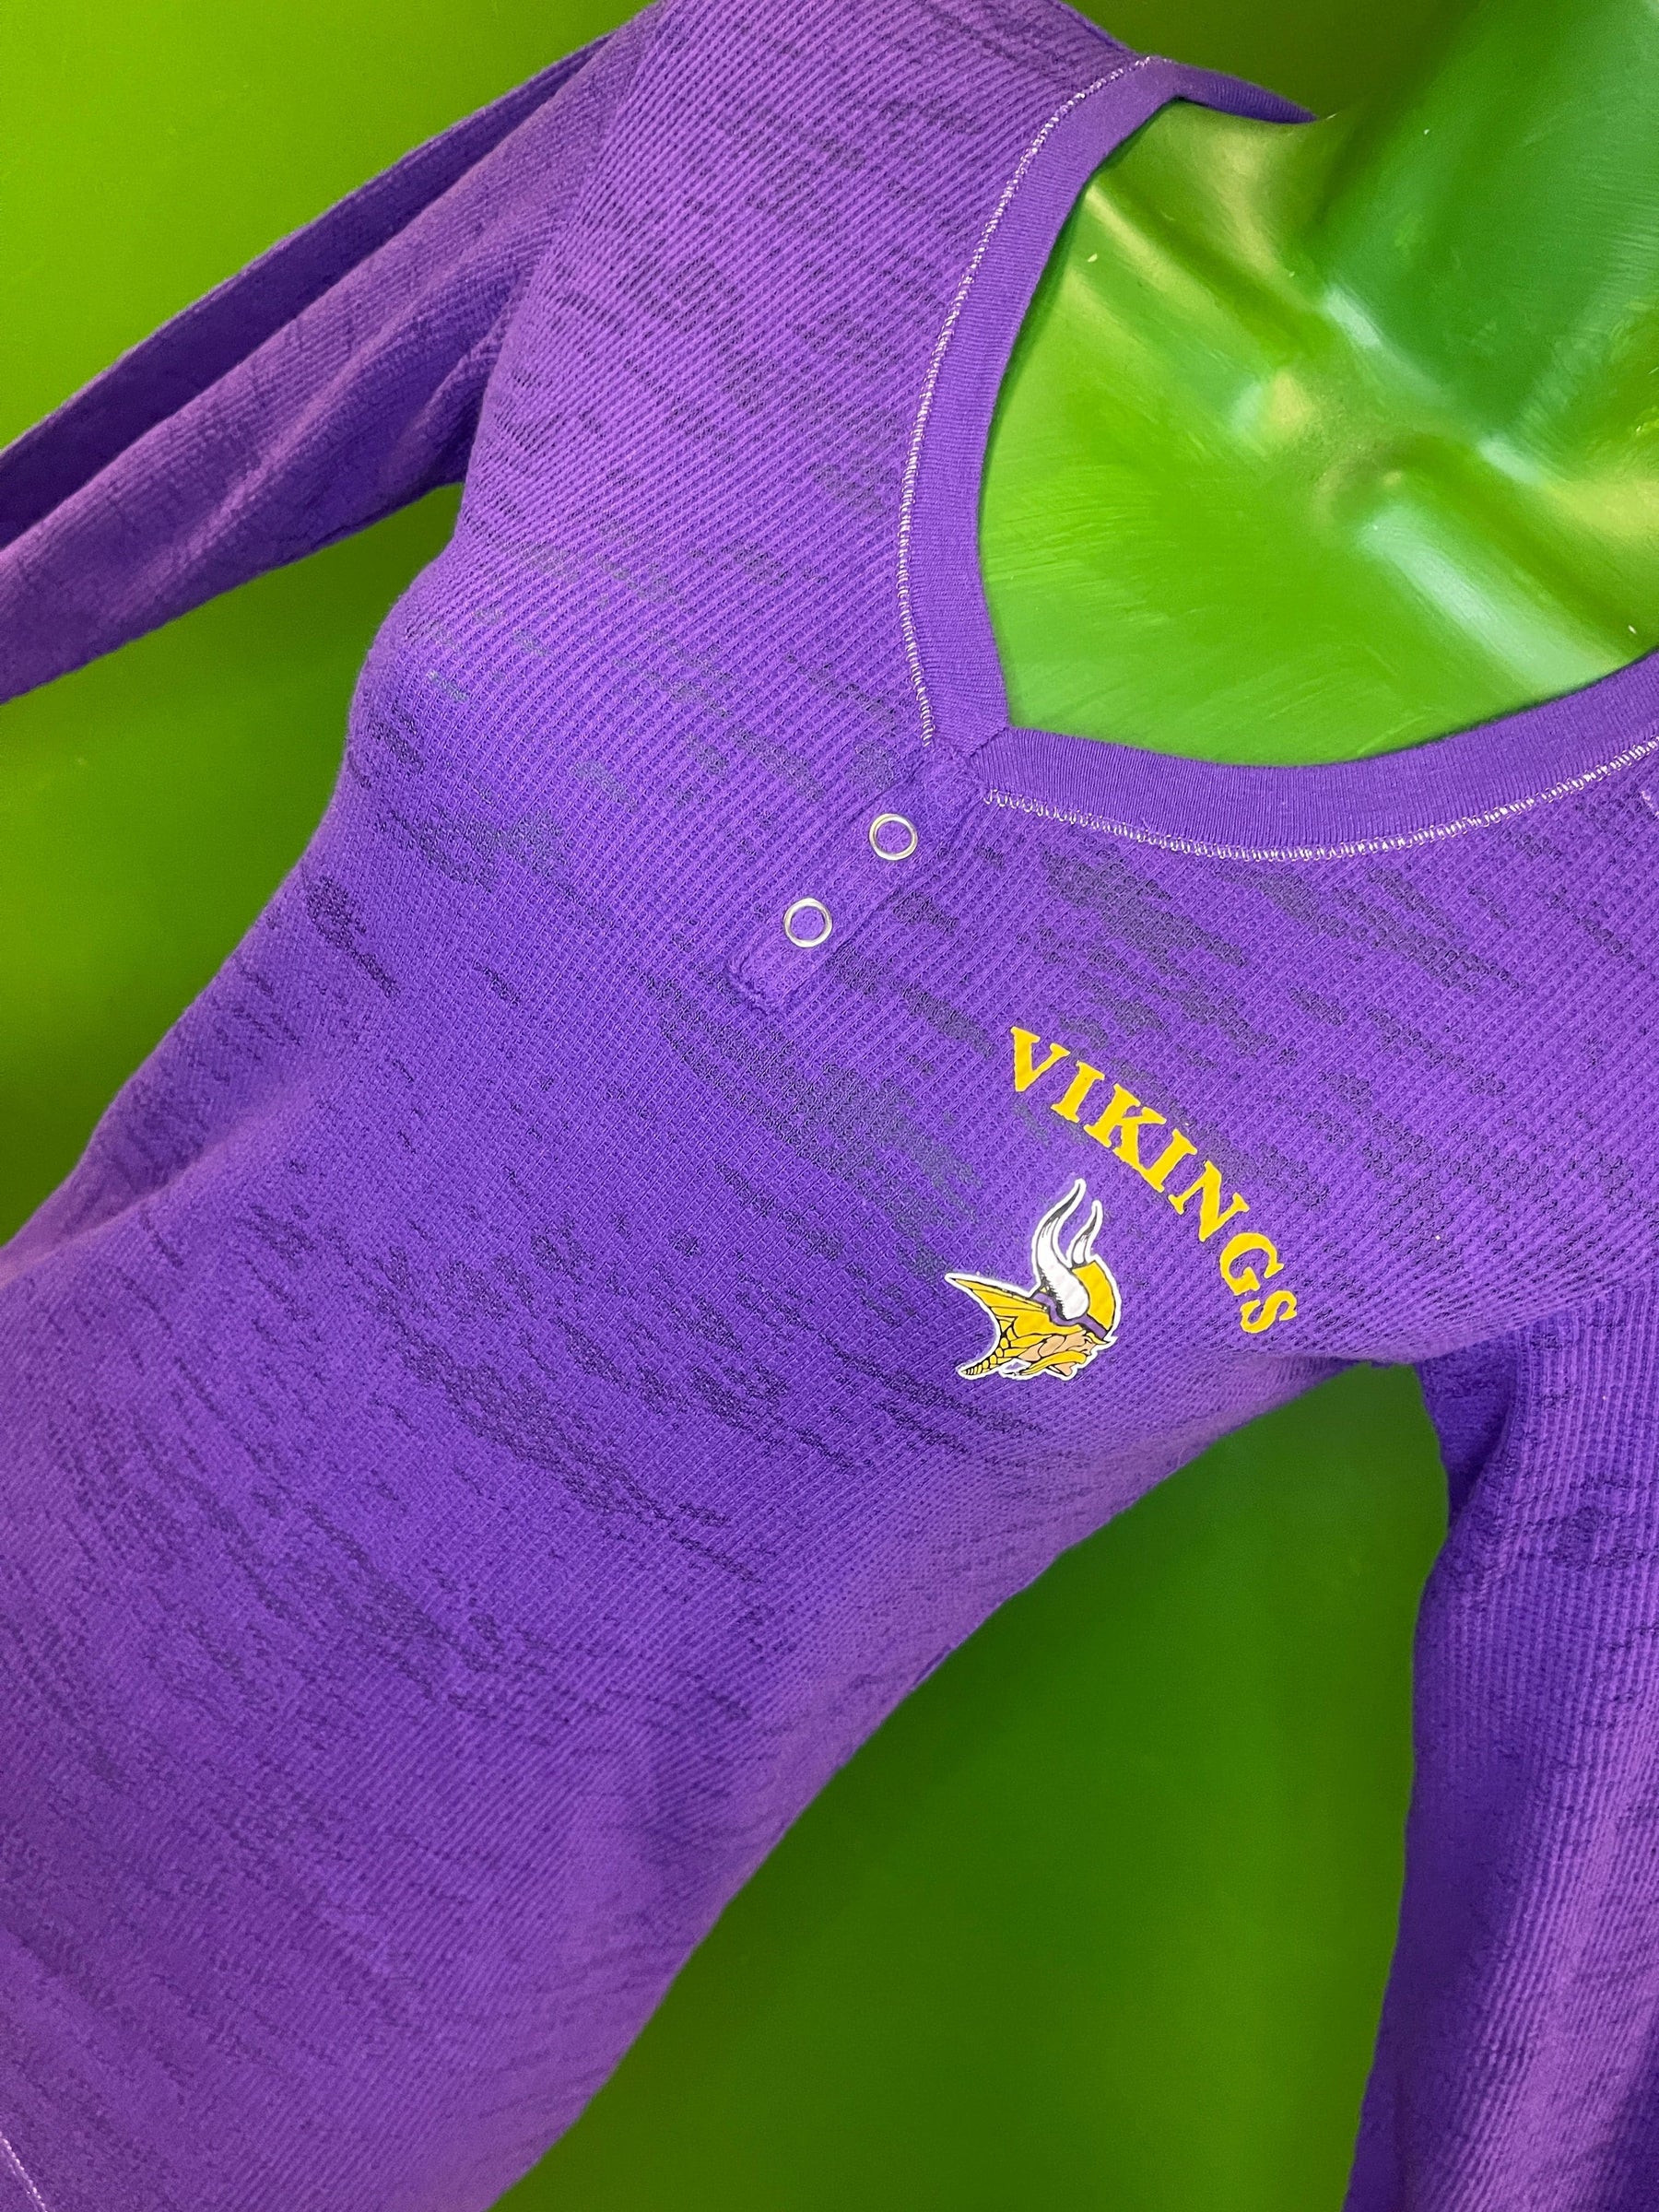 NFL Minnesota Vikings Sheer Waffle Fabric L/S T-Shirt Women's Small